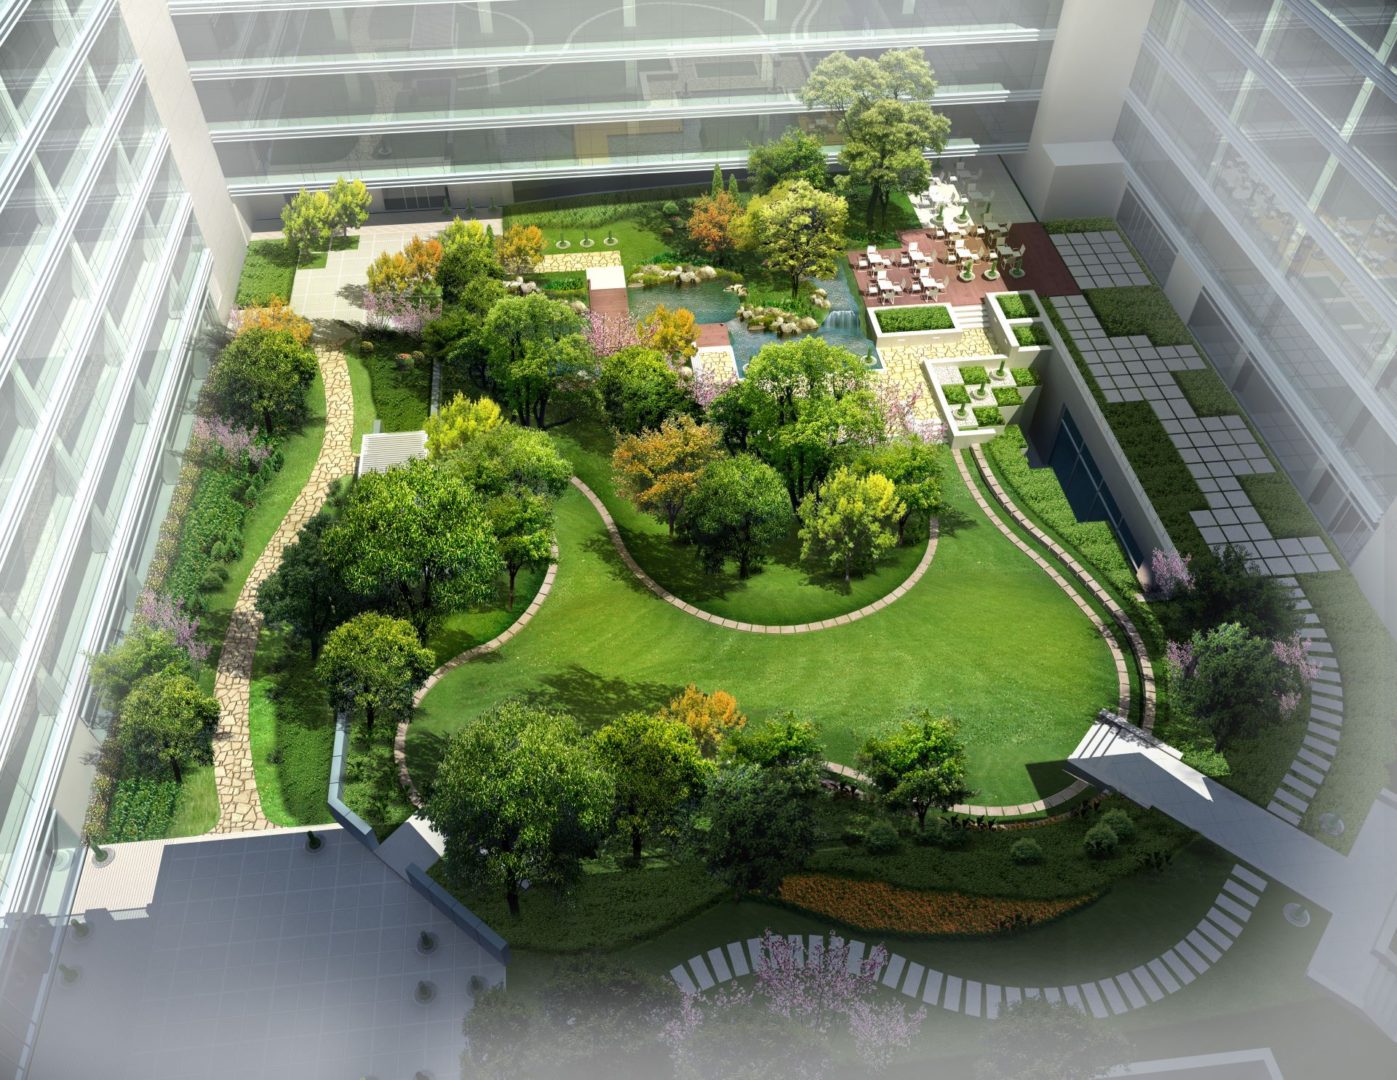 Nashville, TN Park Design and Land Use Planning for Landscape Architectural Design and Development